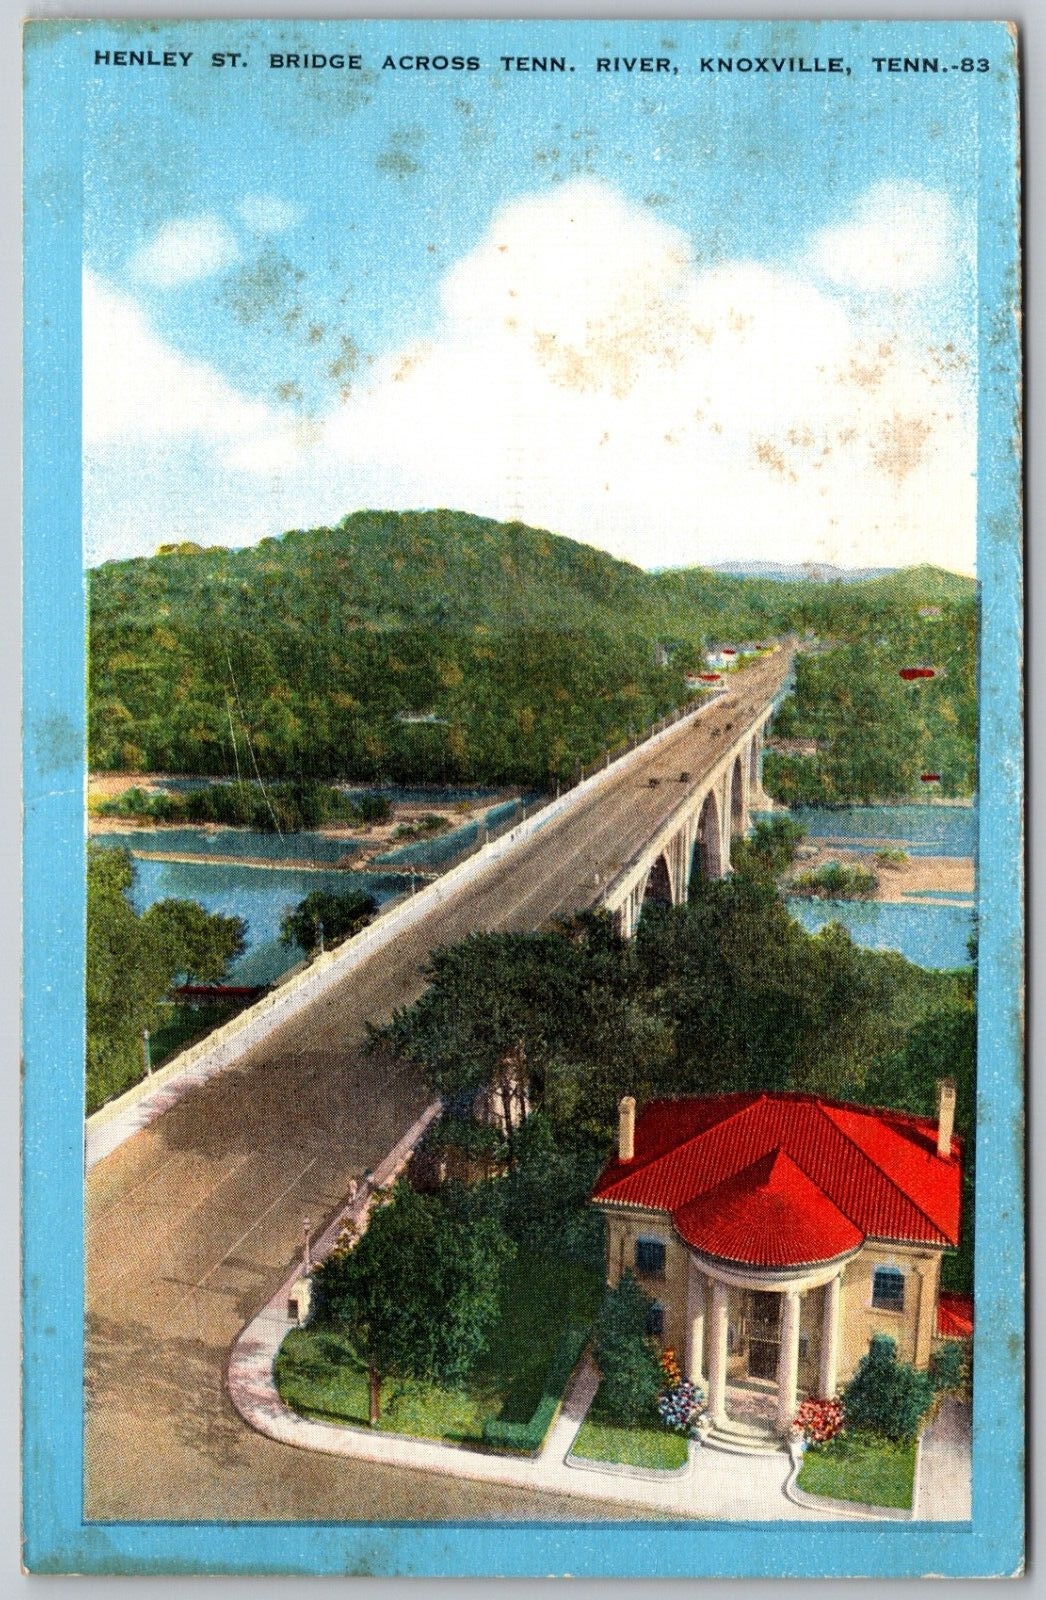 Henley Street Bridge Across Tennessee River Knoxville - c.1940s Postcard 8928